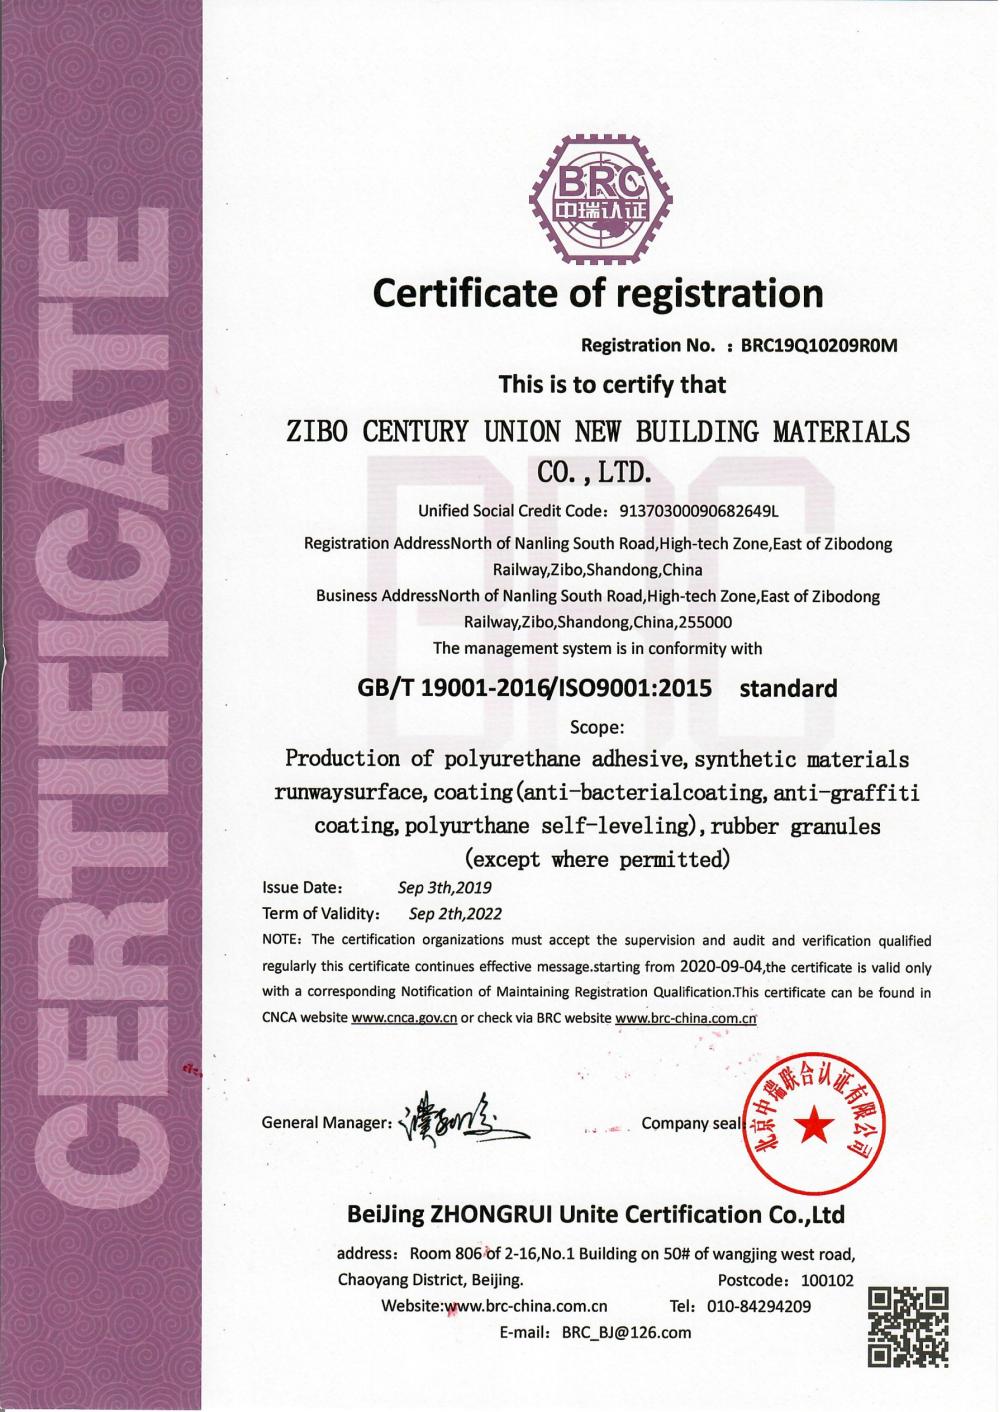 Certificate of registraion